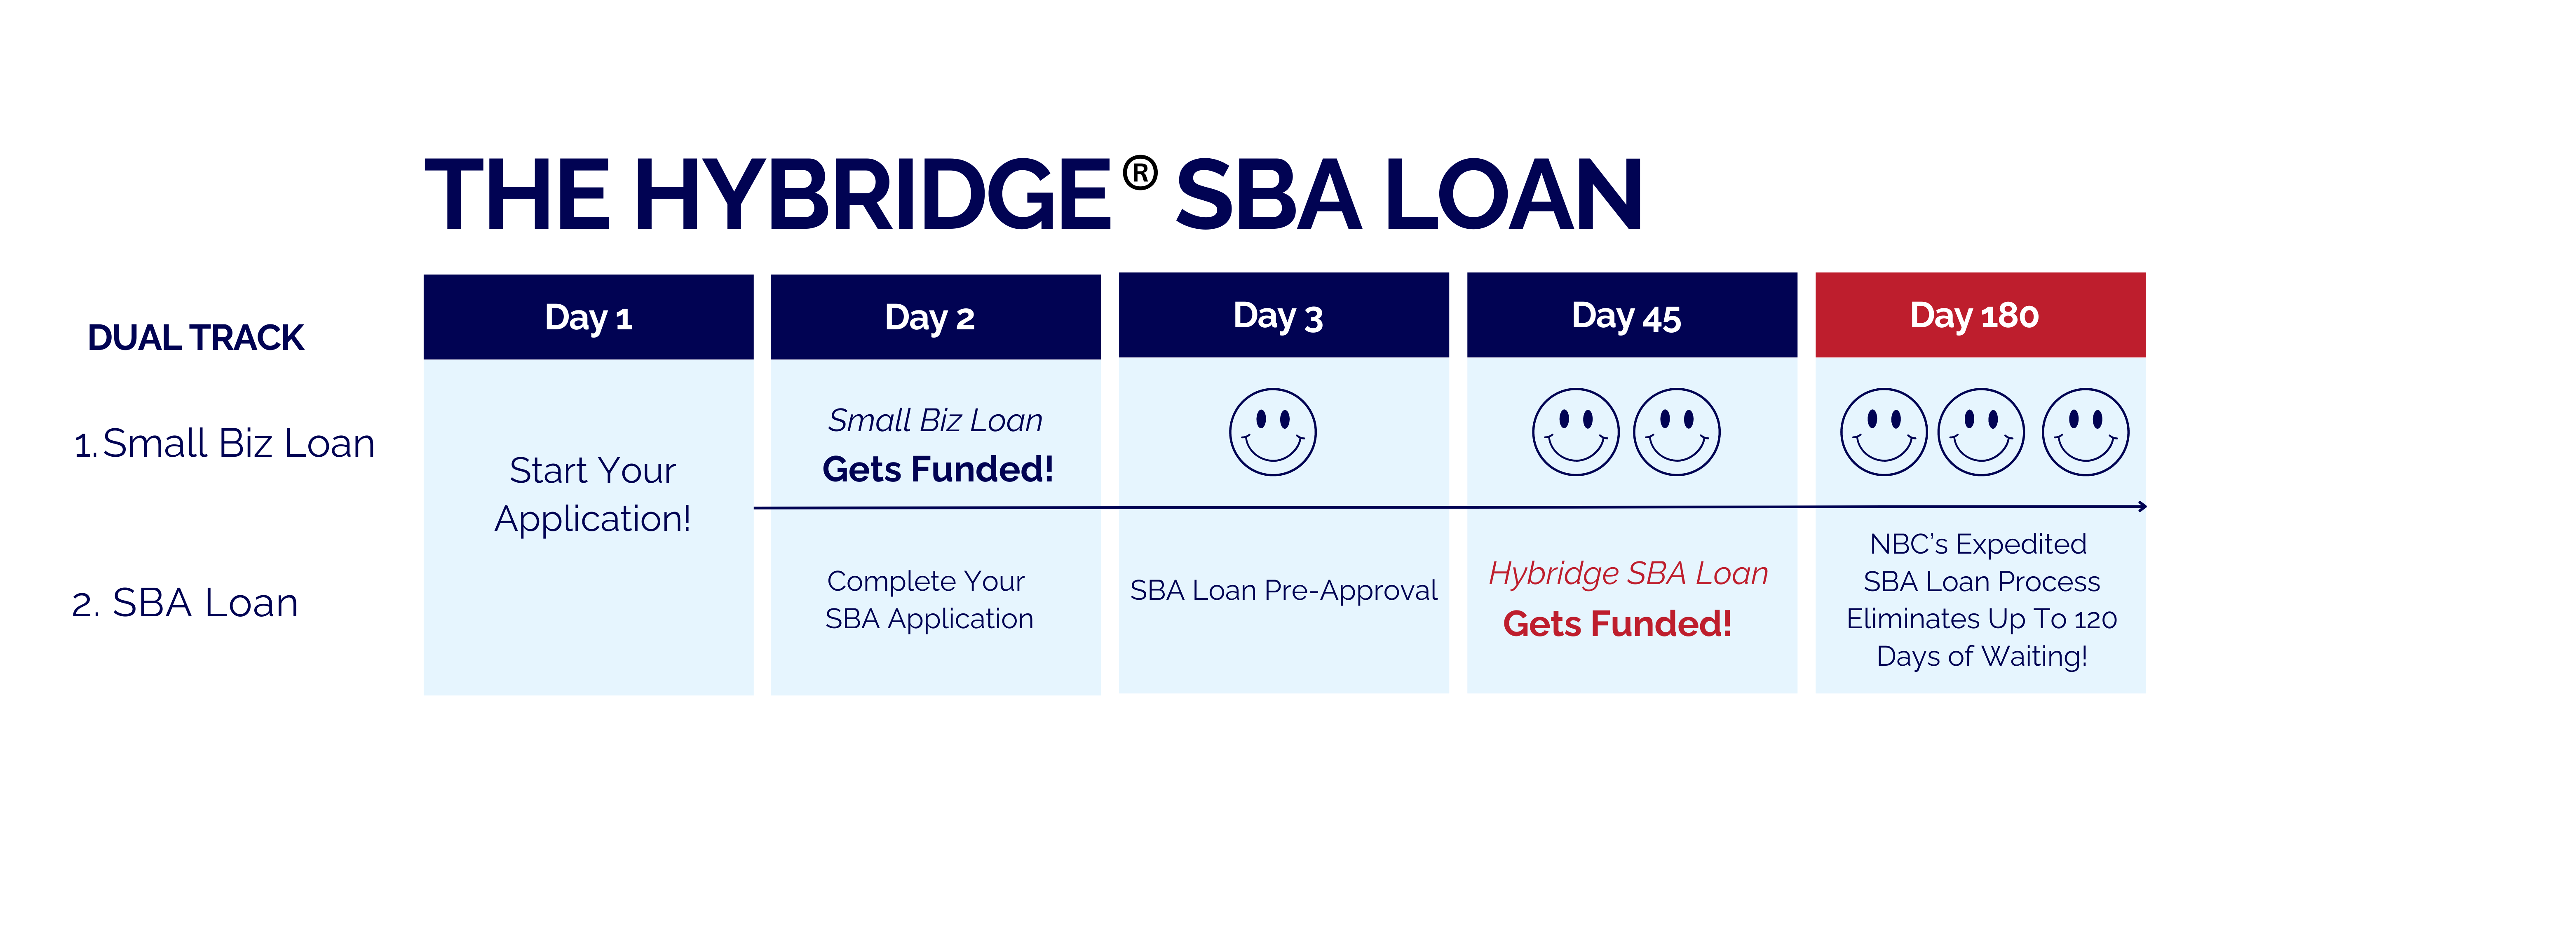 hybridge-sba-loan-timeline.pdf (2)